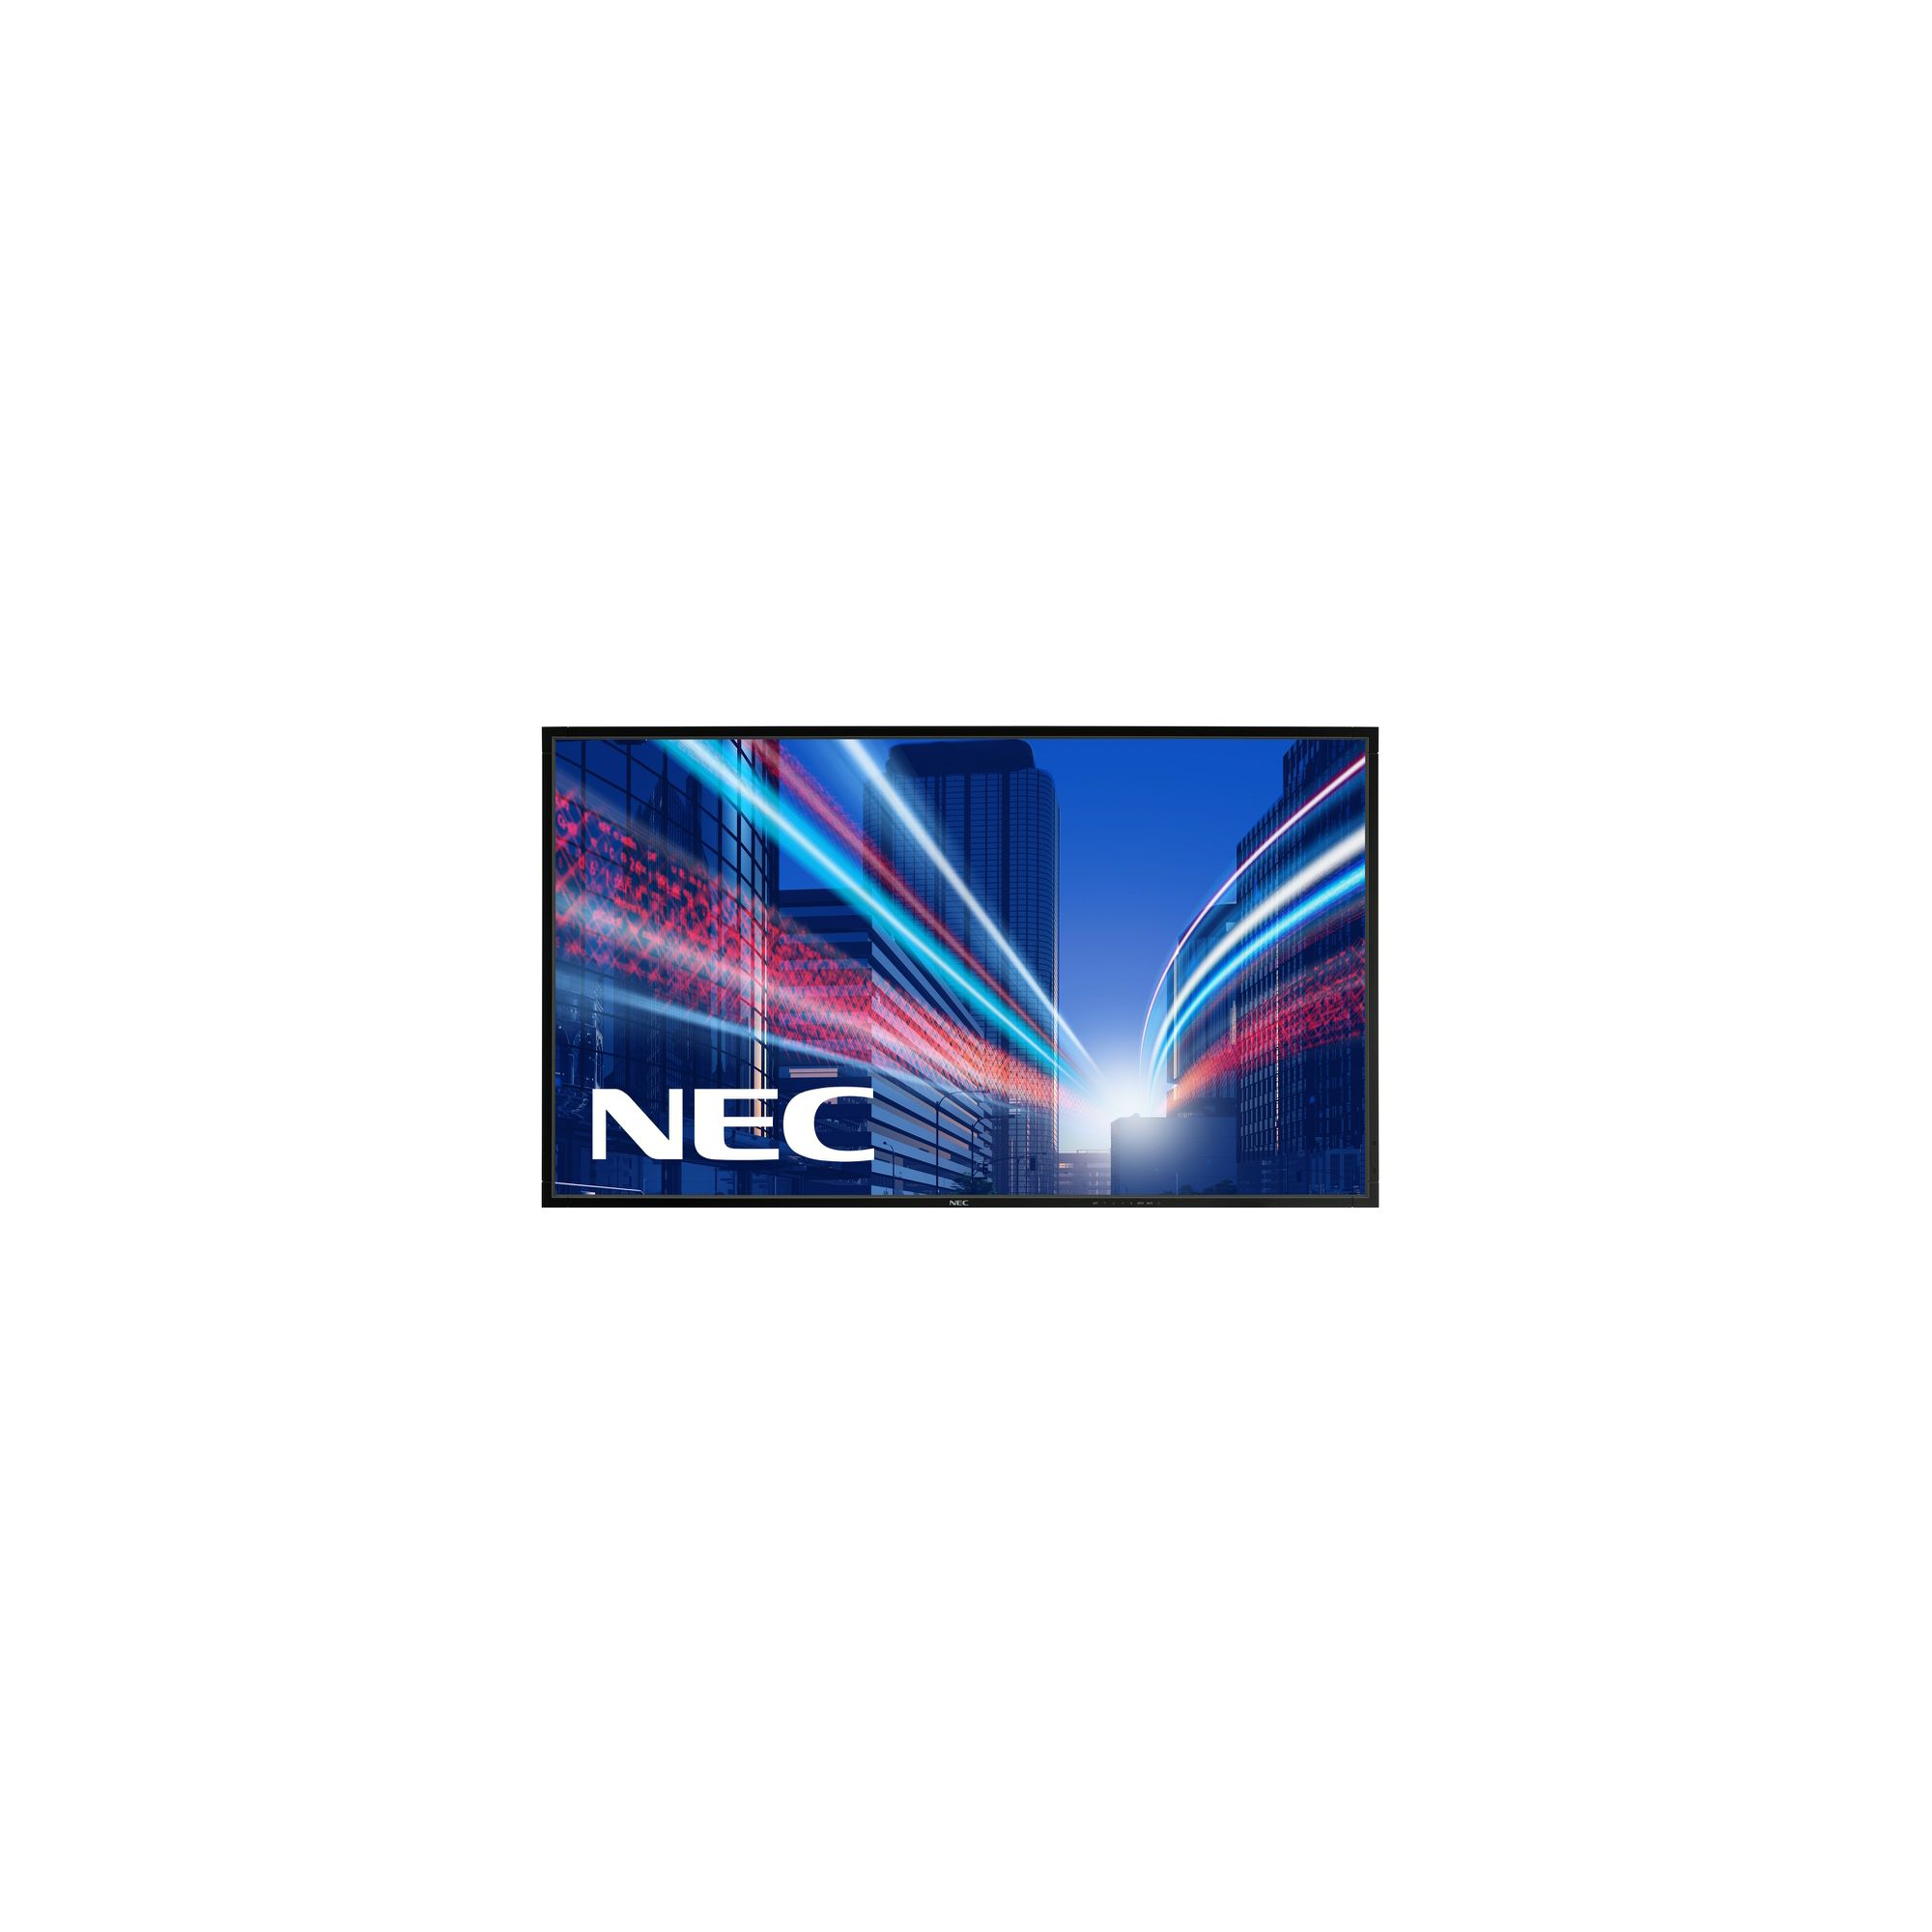 NEC 60003174 Displays MultiSync X462HB 46 inch Public Display